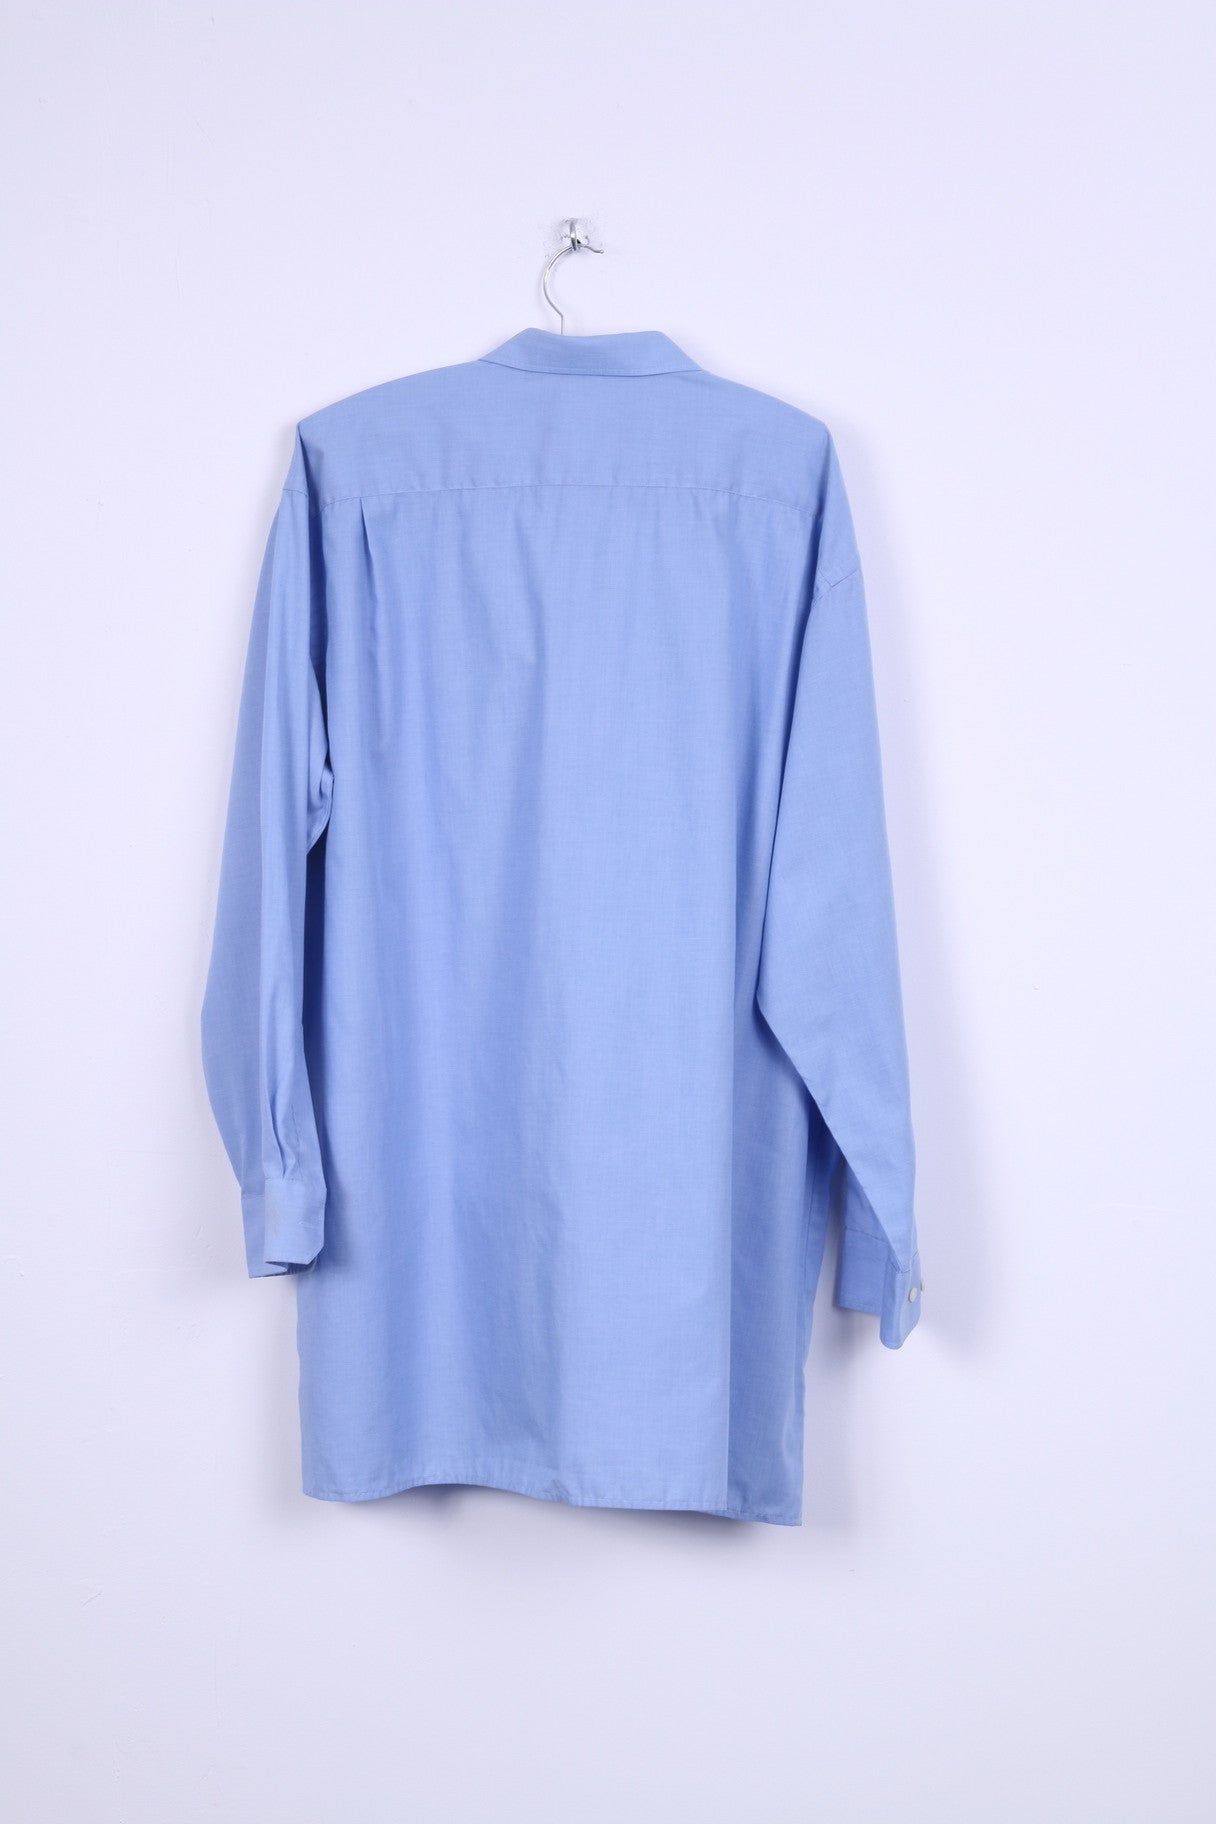 Paul Finley Mens XXL 45 Casual Shirt Blue Long Sleeve Cotton